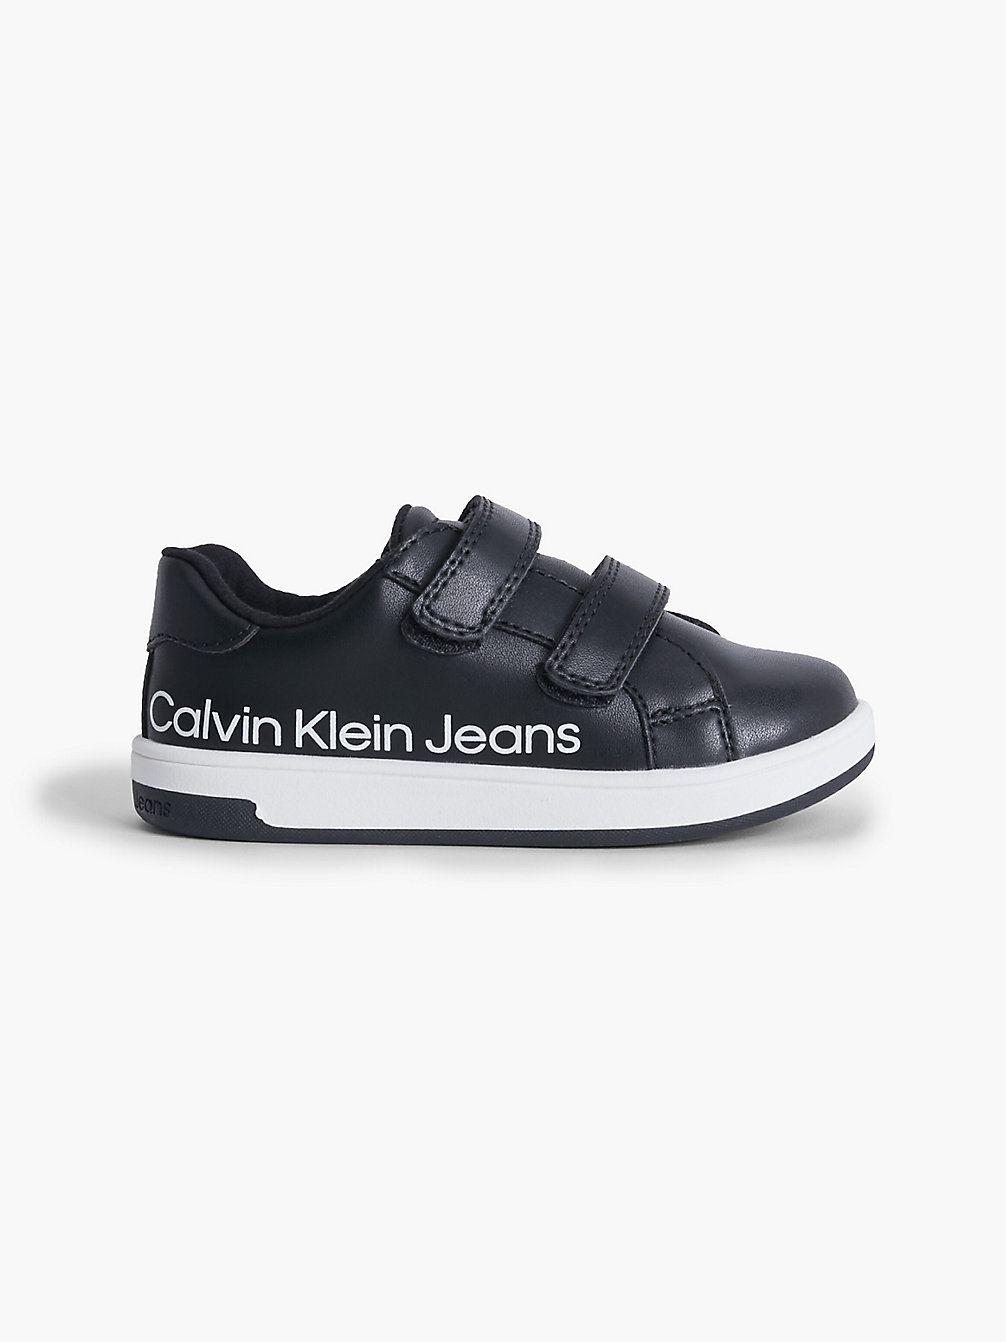 BLACK > Детские кроссовки из переработанного материала > undefined kids unisex - Calvin Klein